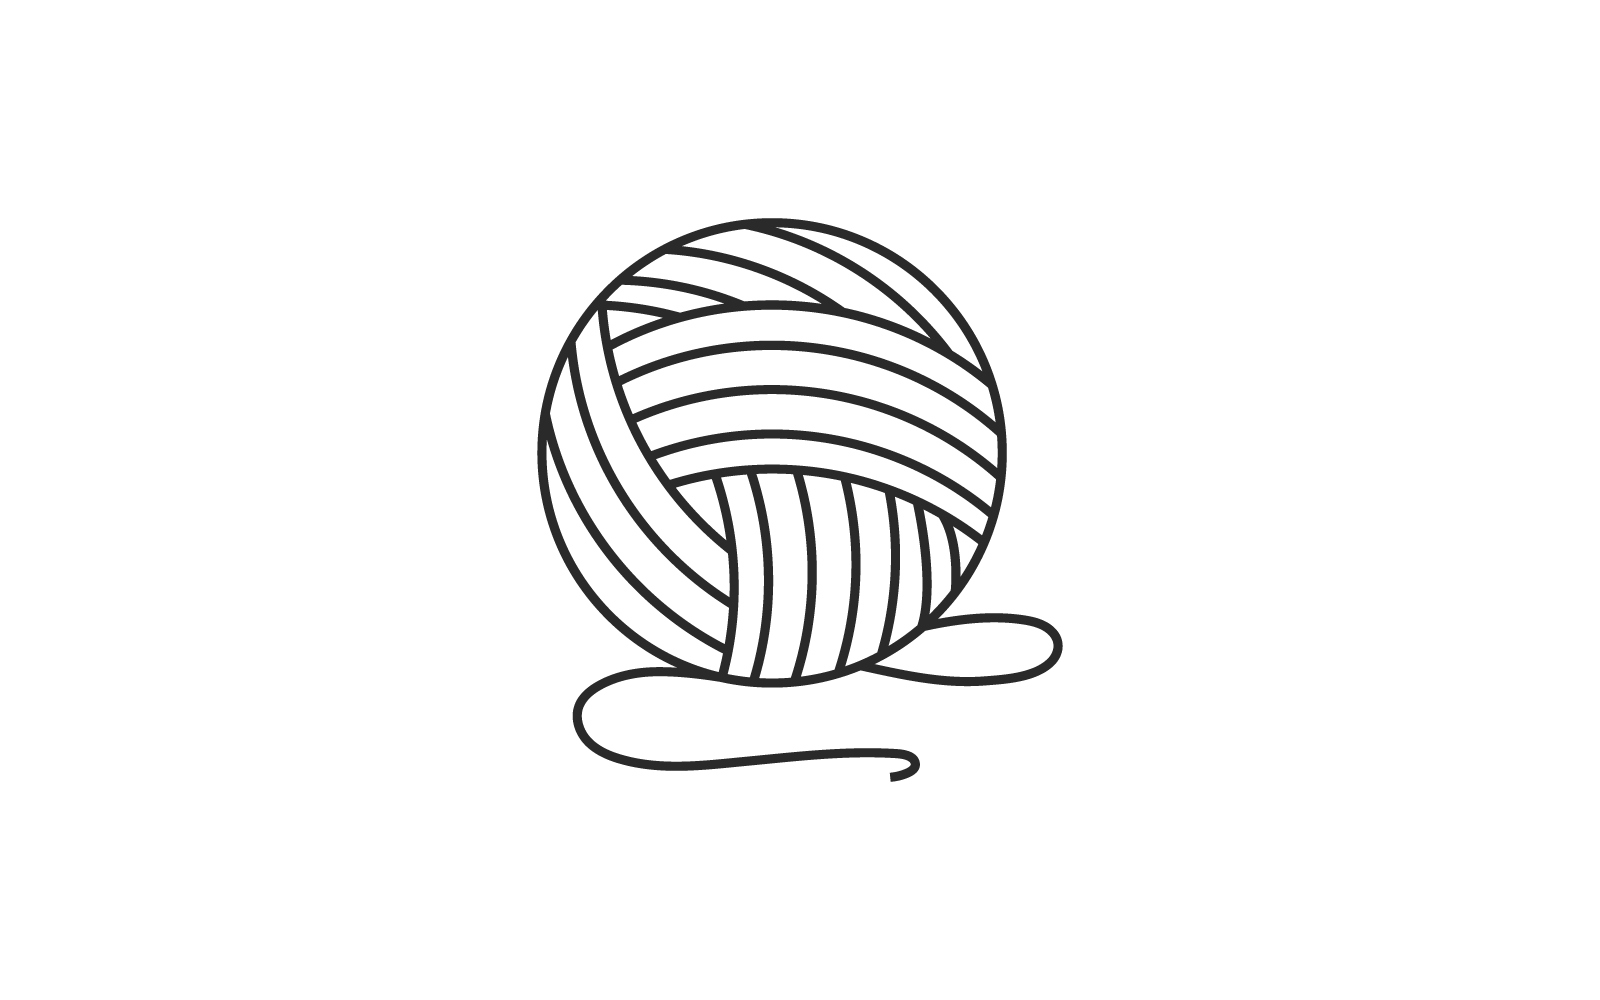 Yarn ball illustration vector flat design illustration